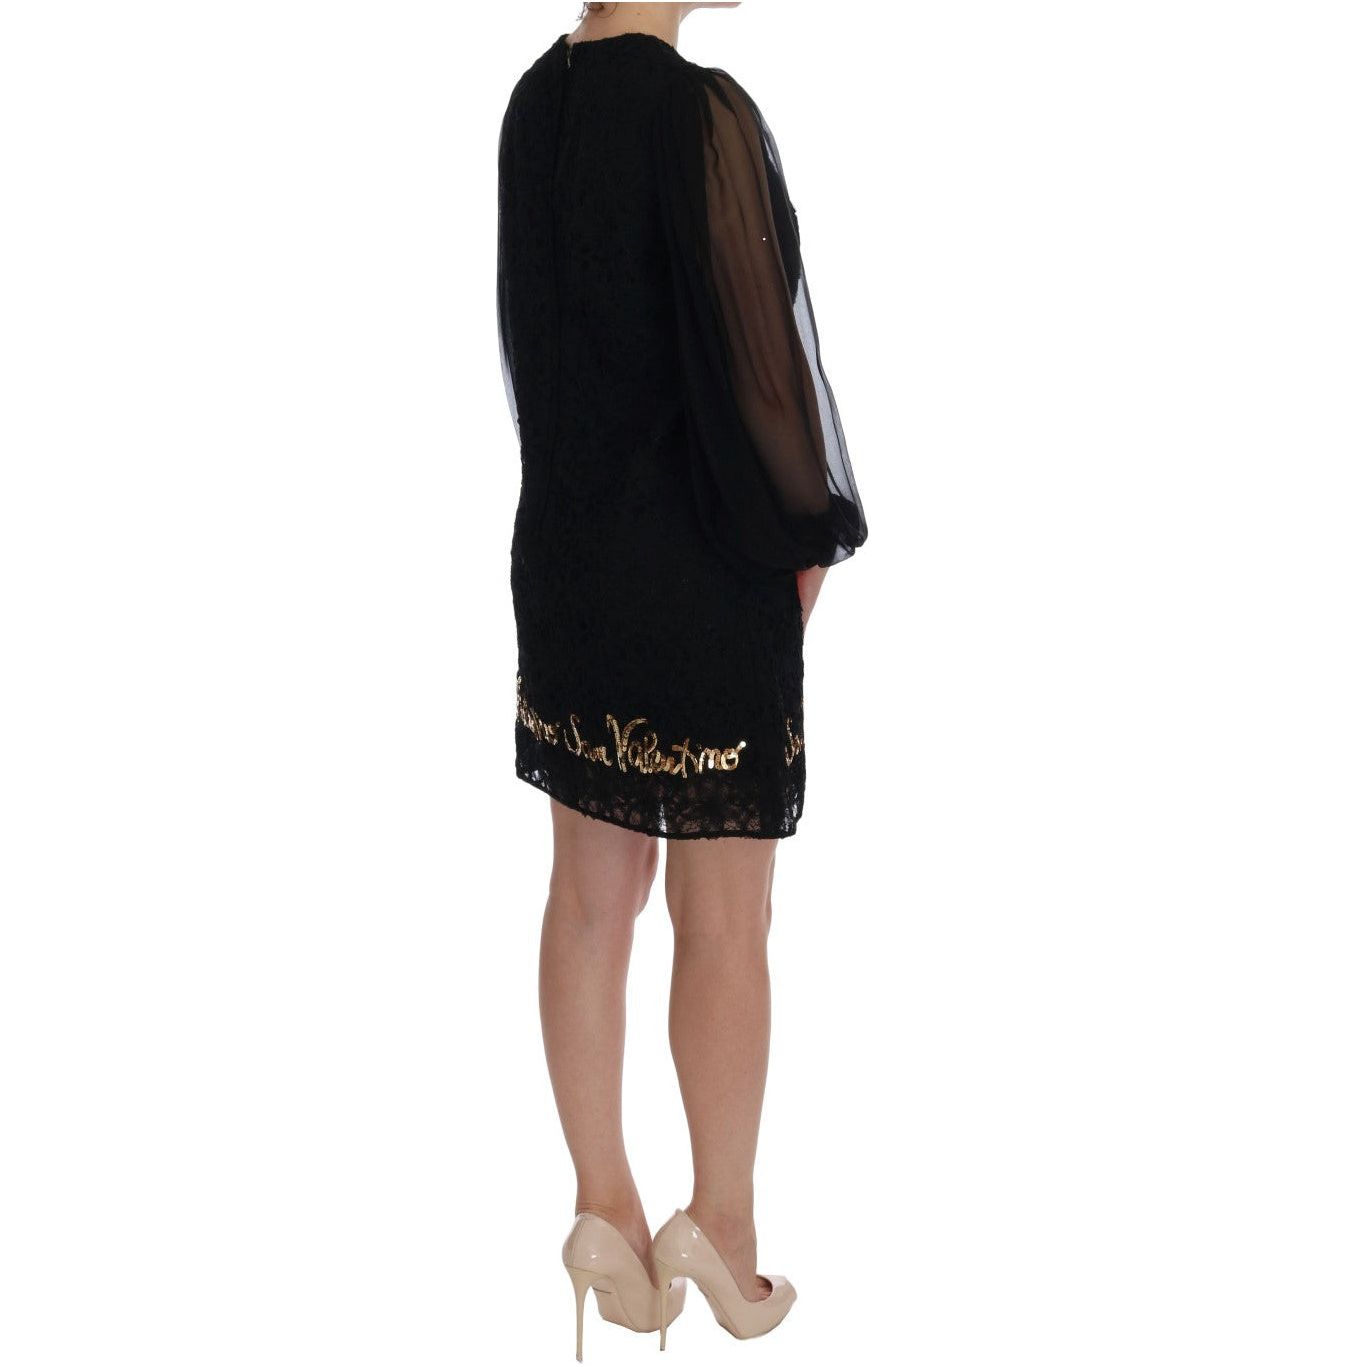 Dolce & Gabbana Black Lace Sequined Shift Dress black-san-valentino-sequined-shift-dress 450883-black-san-valentino-sequined-shift-dress-4_84a03e4b-8845-485a-8ecd-bdef05a64d66.jpg